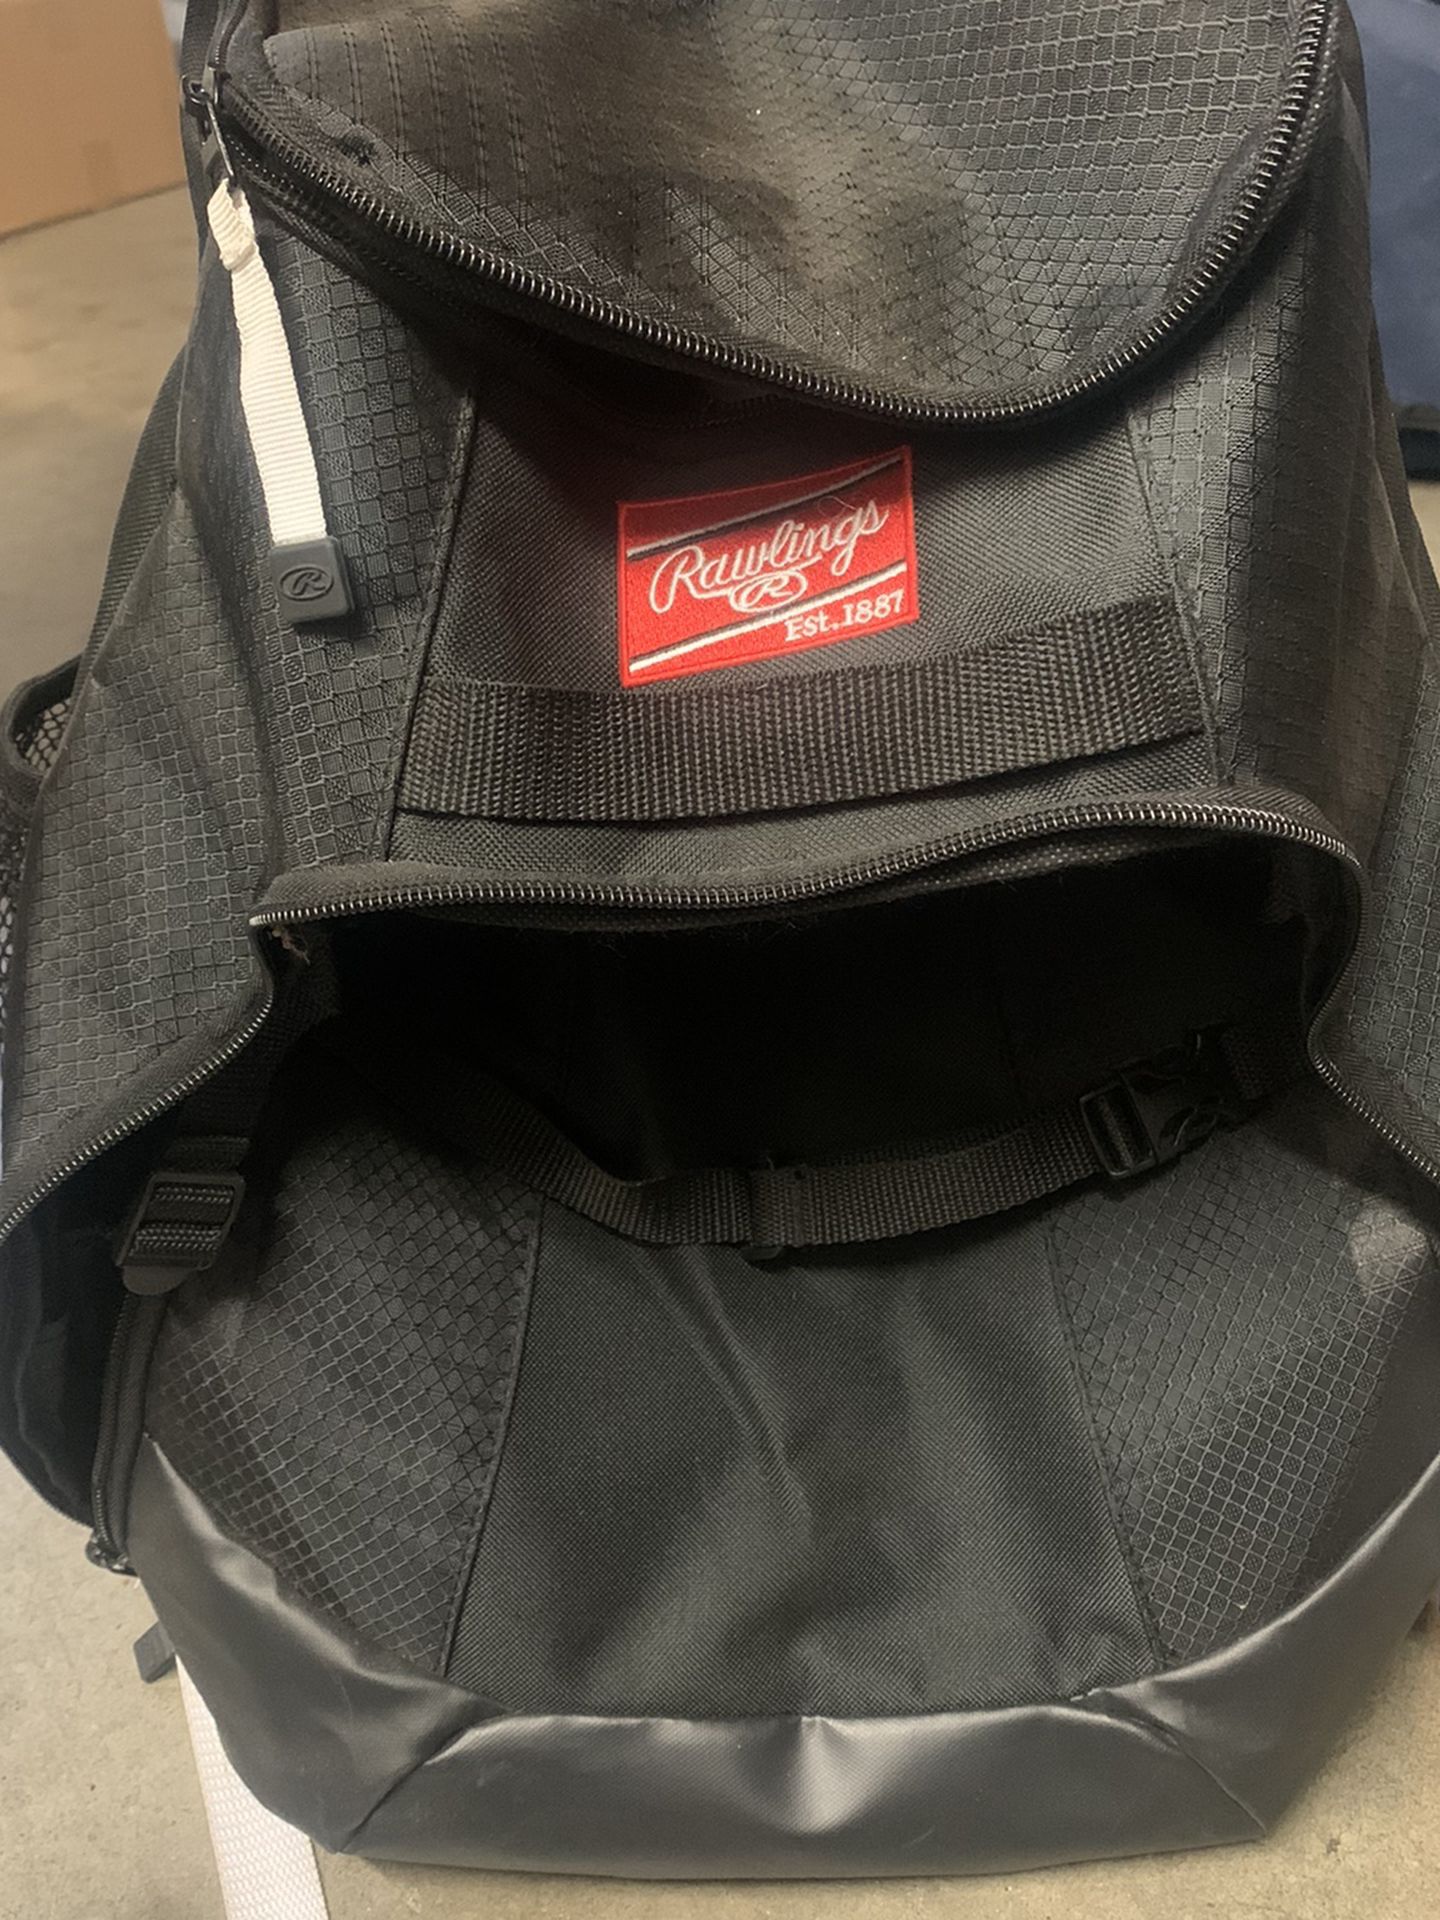 Rawlings Baseball Bag With Hook To Hang